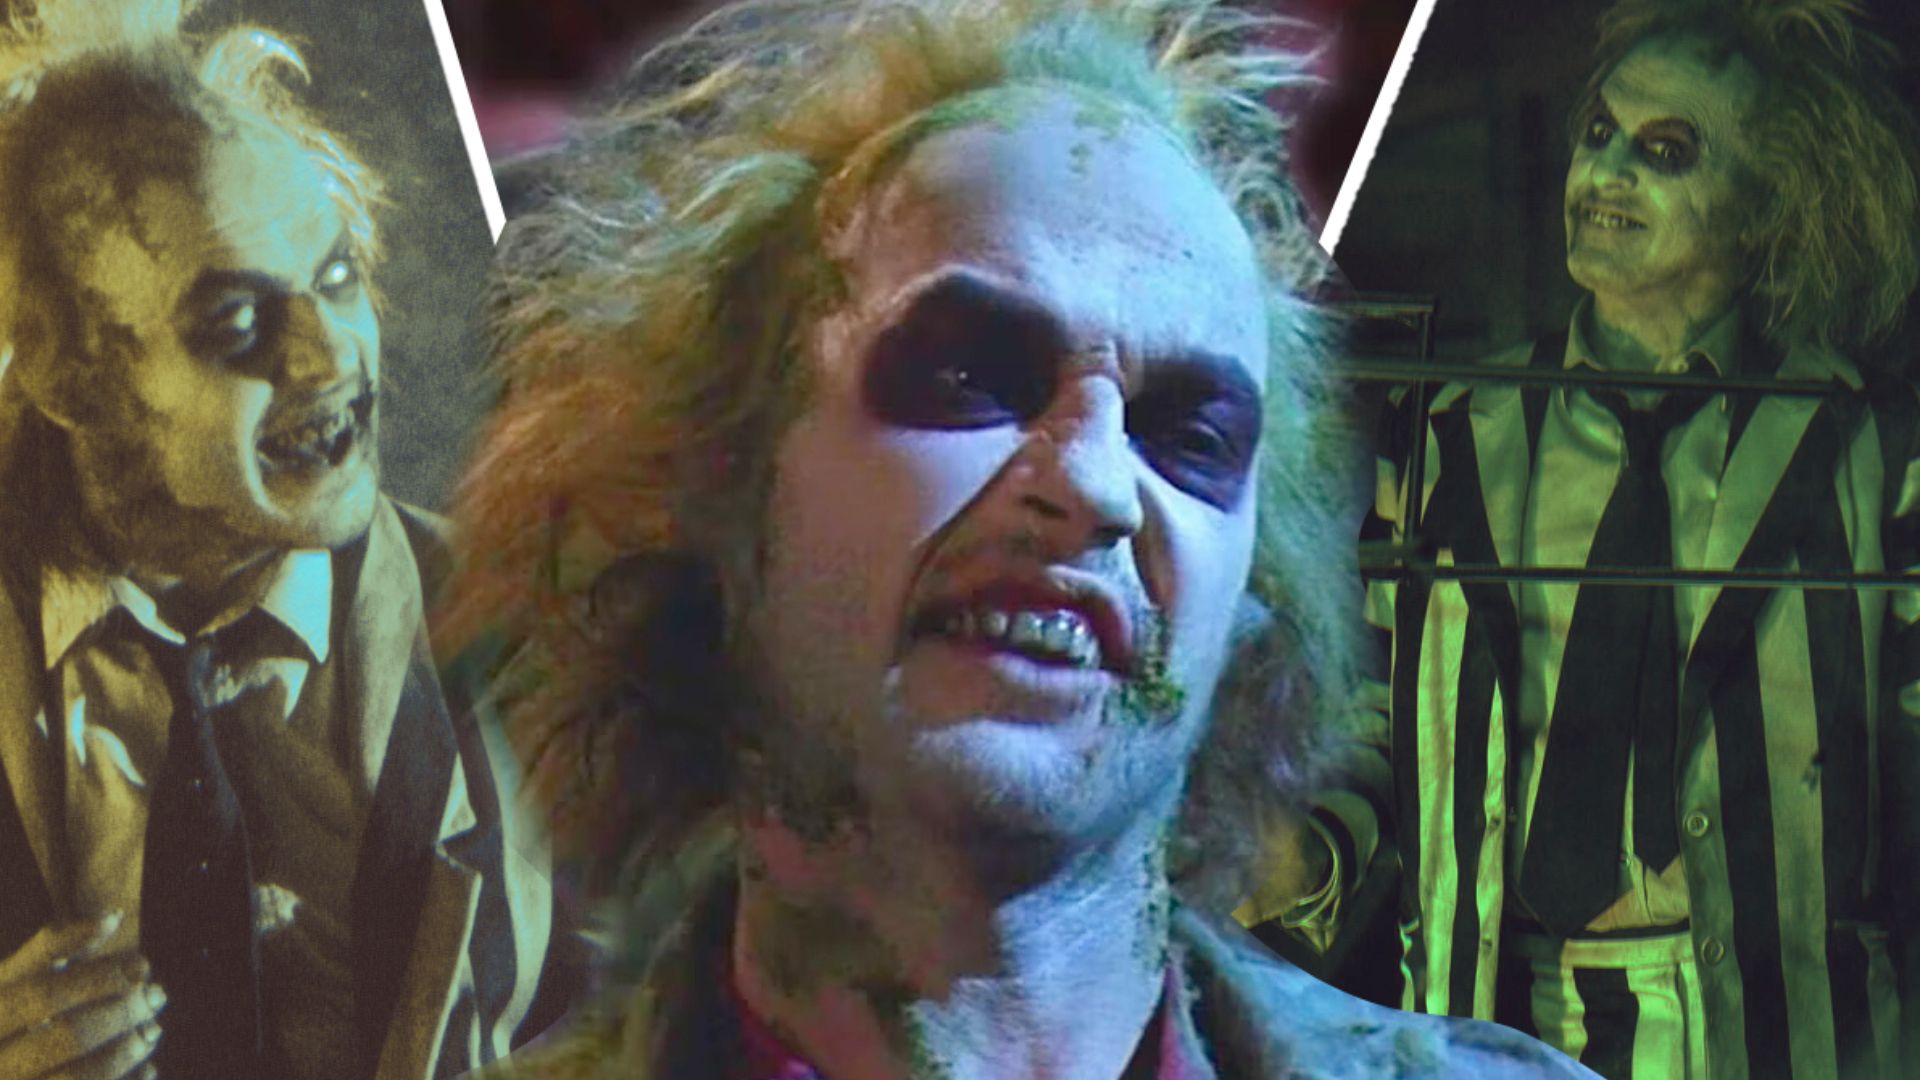 Michael Keaton as Beetlejuice with white makeup and long hair in Beetlejuice